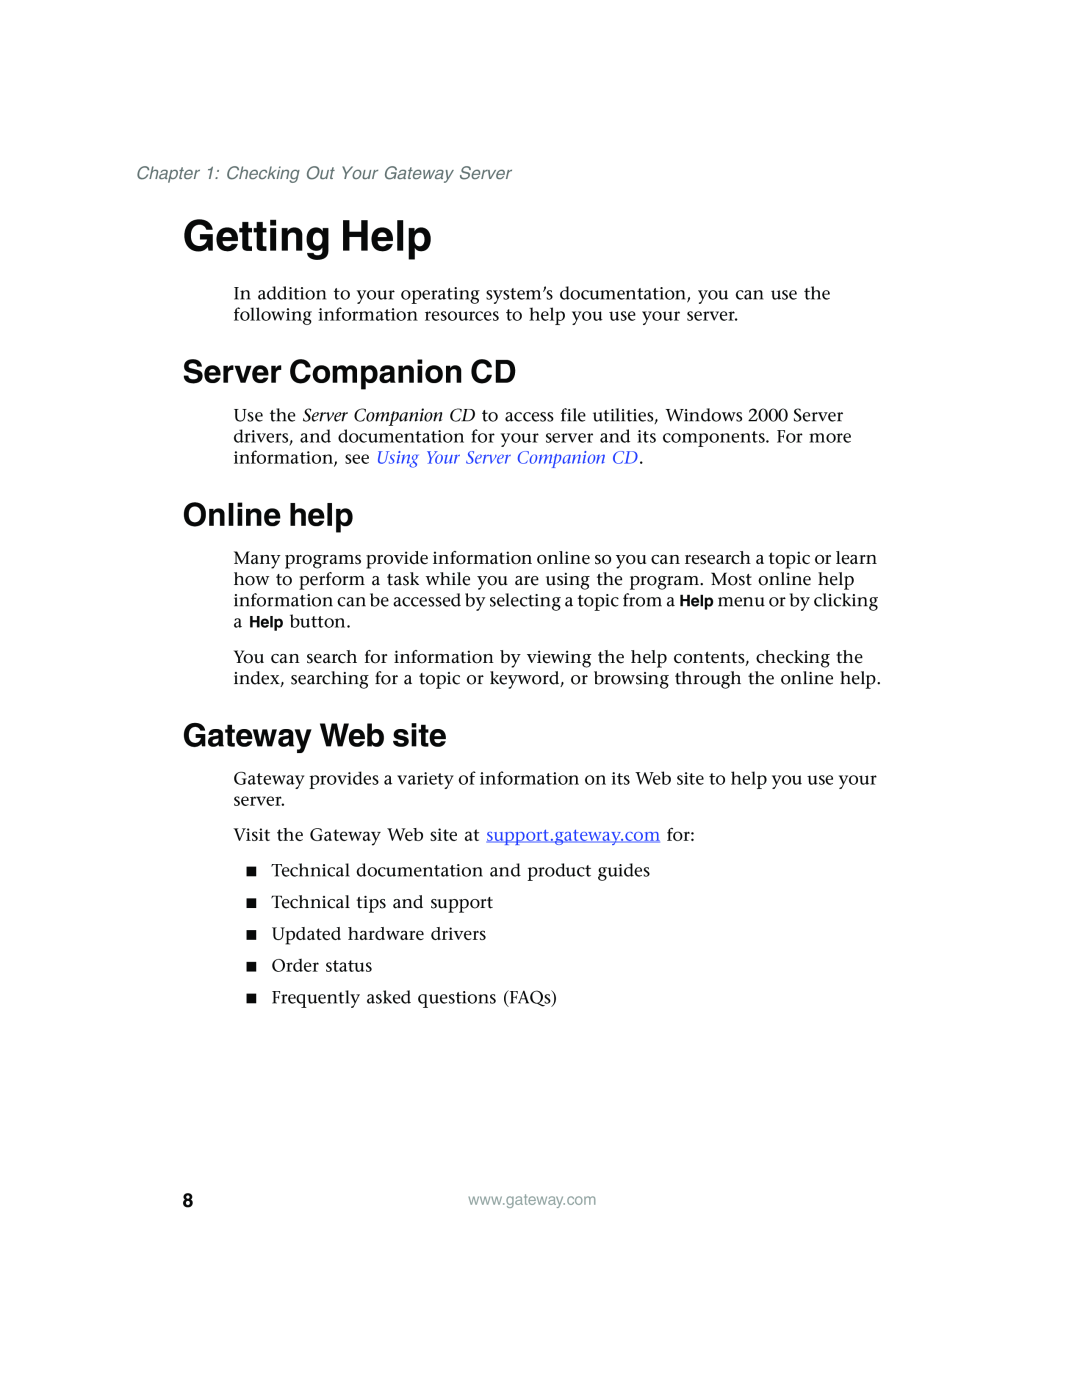 Gateway 960 manual Getting Help, Server Companion CD, Online help, Gateway Web site, Checking Out Your Gateway Server 